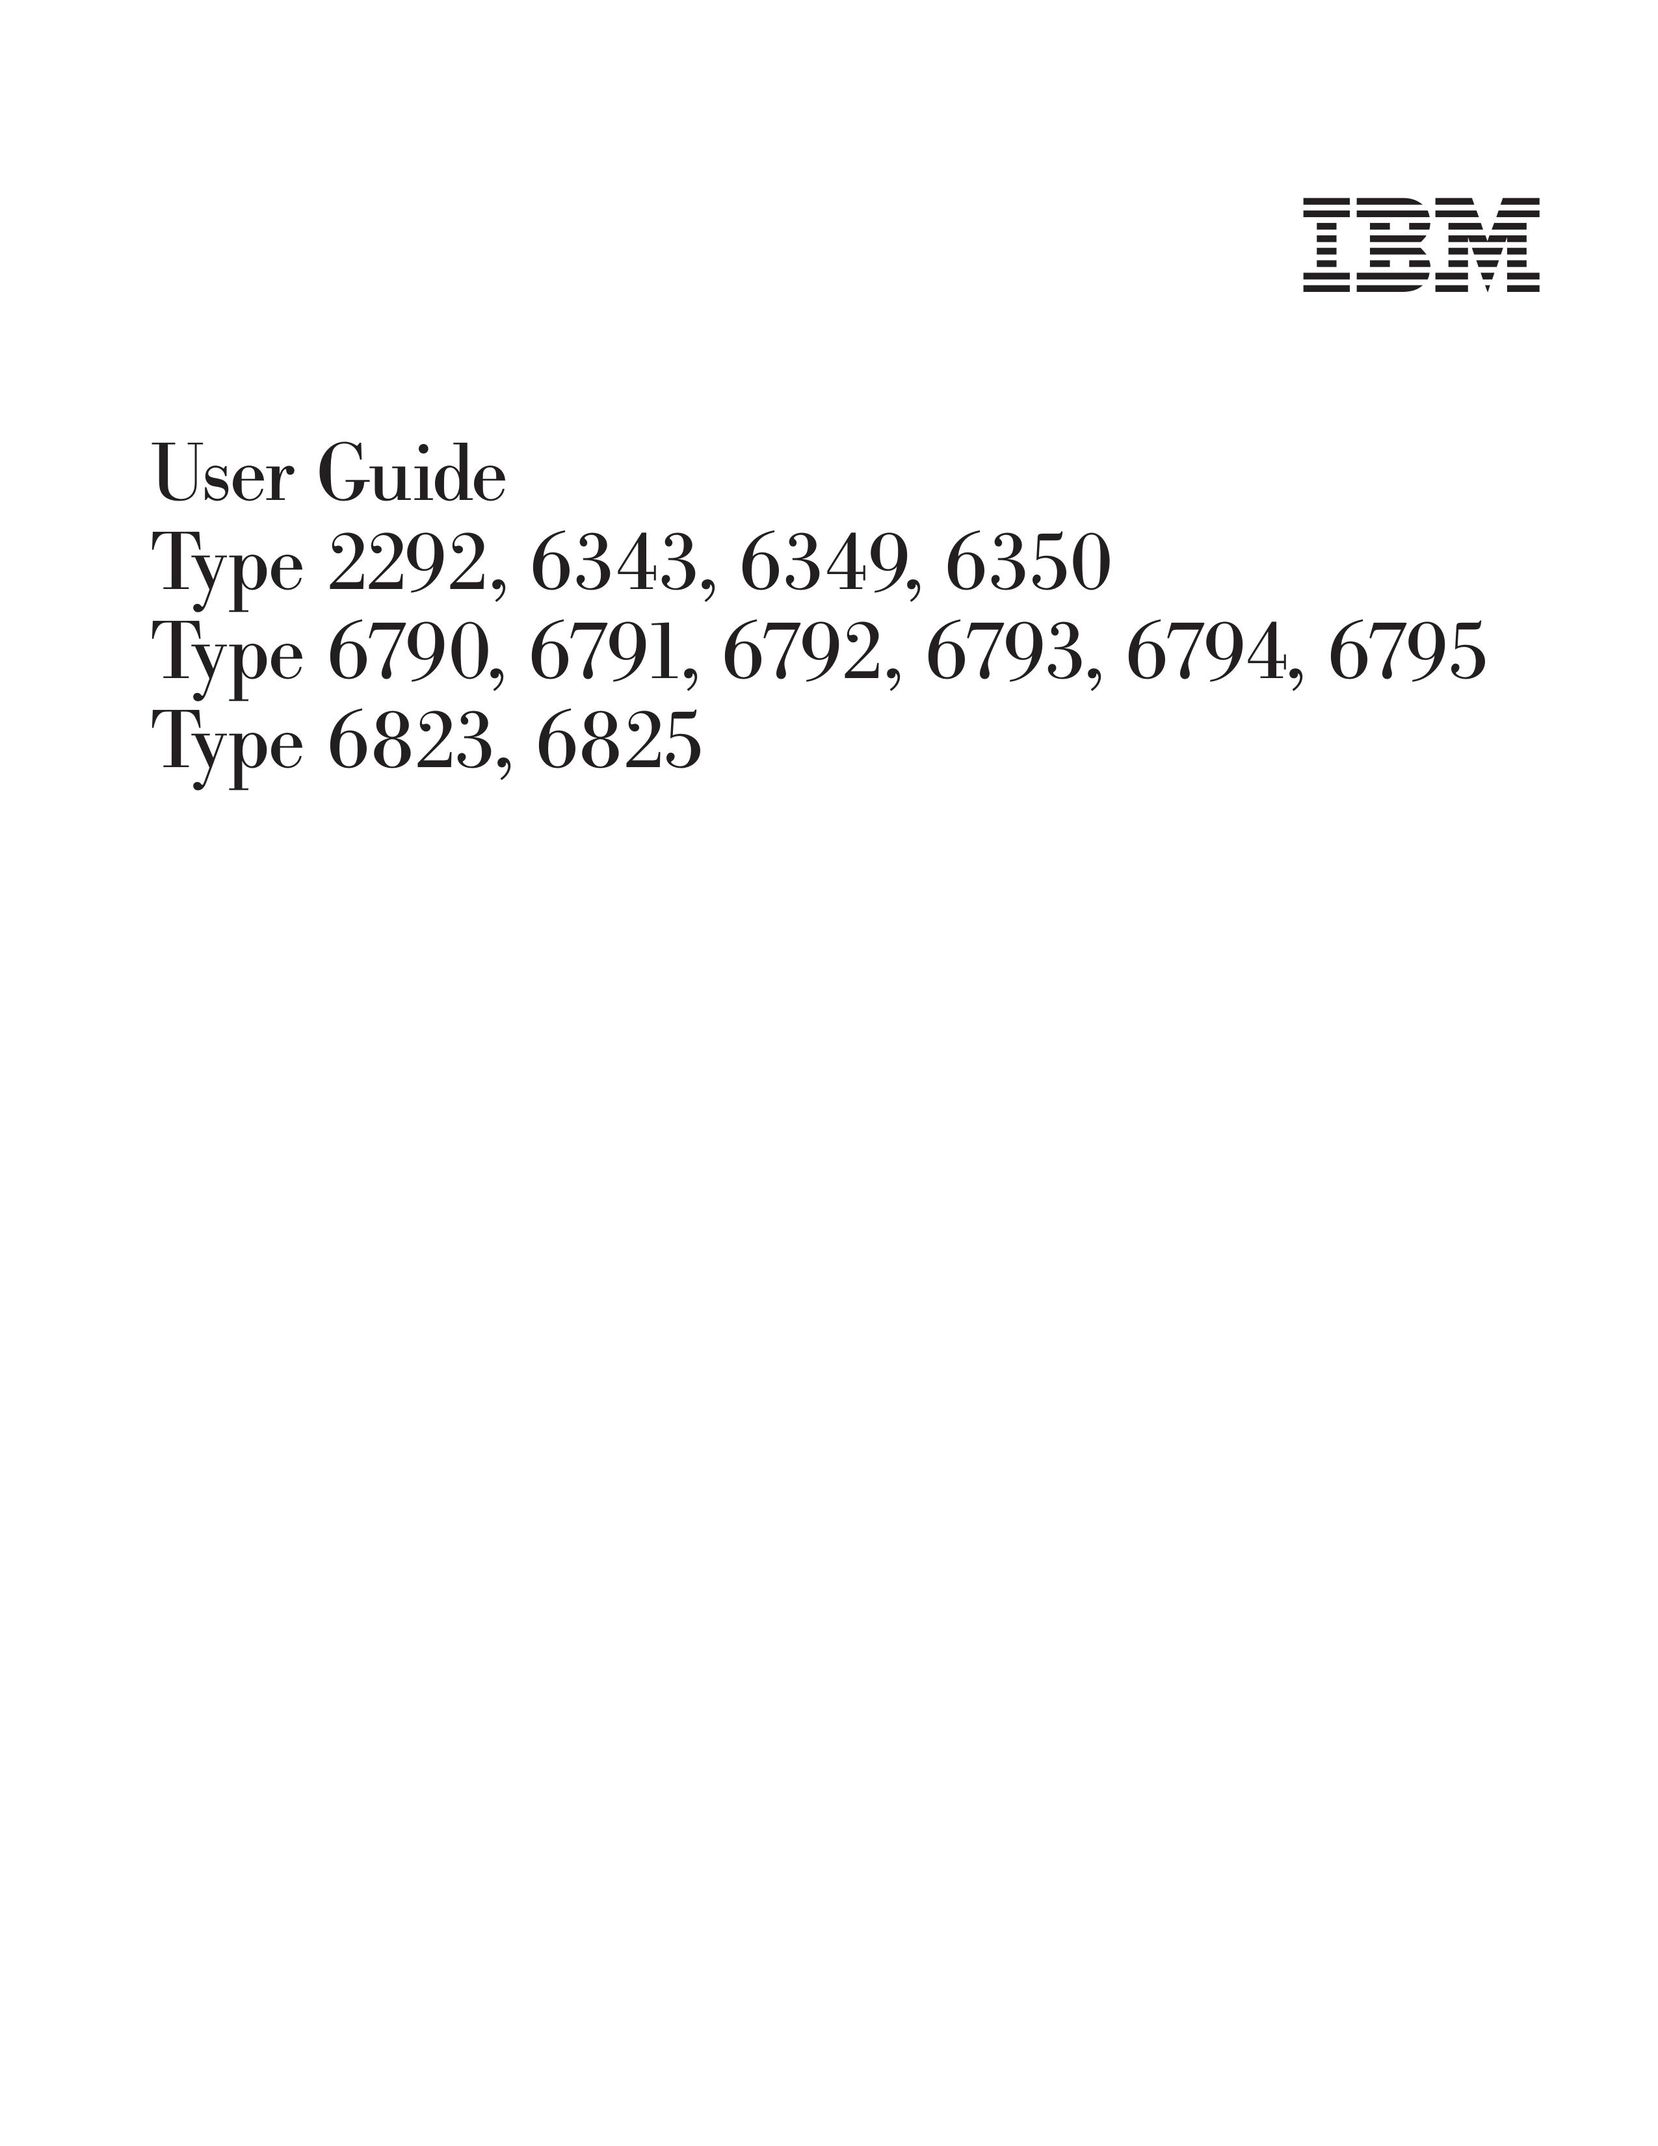 IBM Partner Pavilion 6793 Personal Computer User Manual